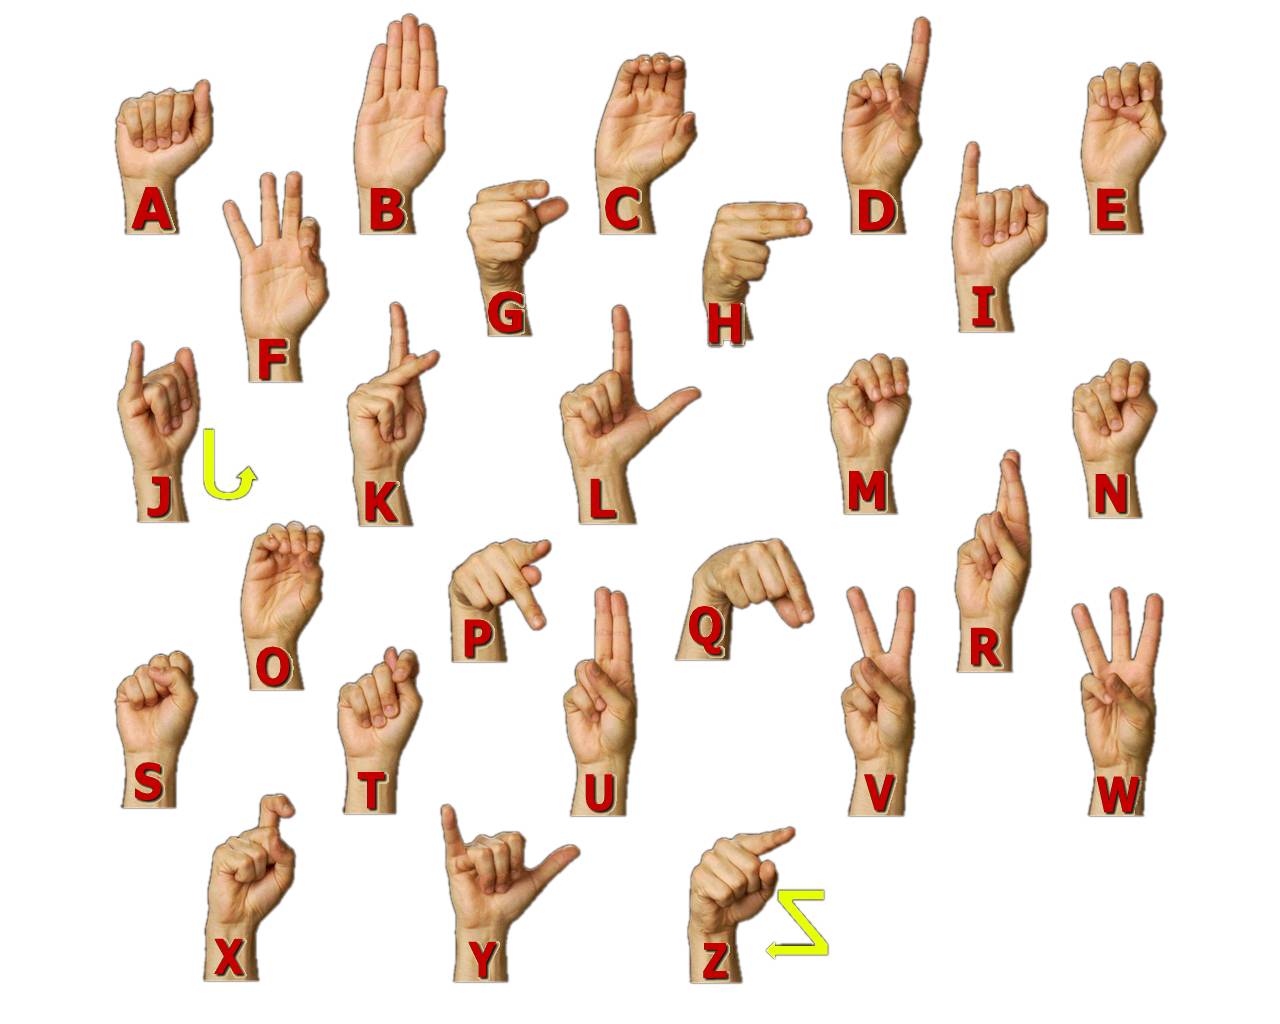 American Sign Language Schools with Program Information